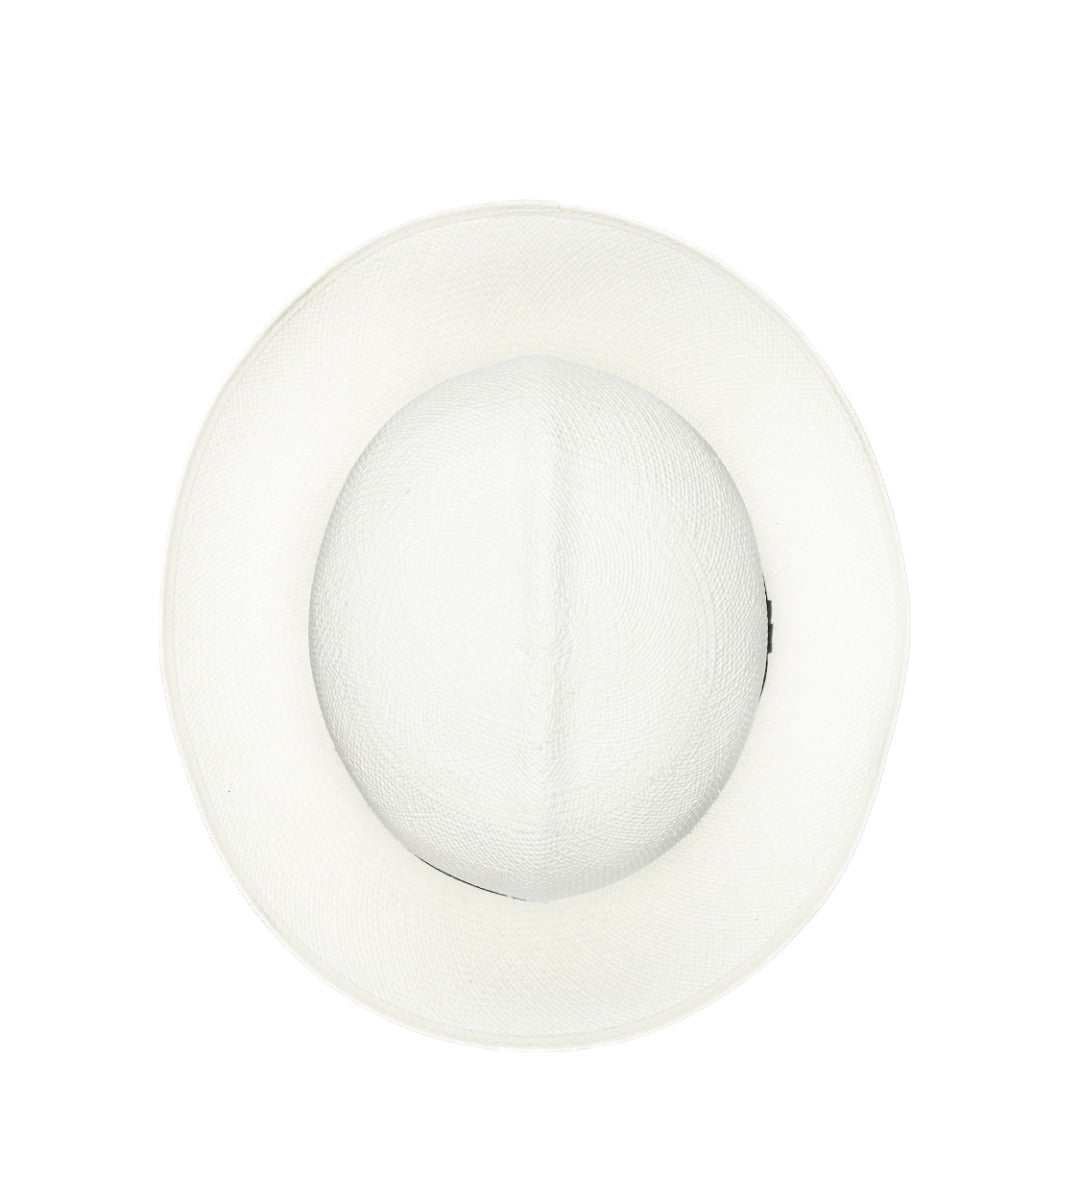 Superfine Folder Panama Hat With Navy Band & Cream Binding